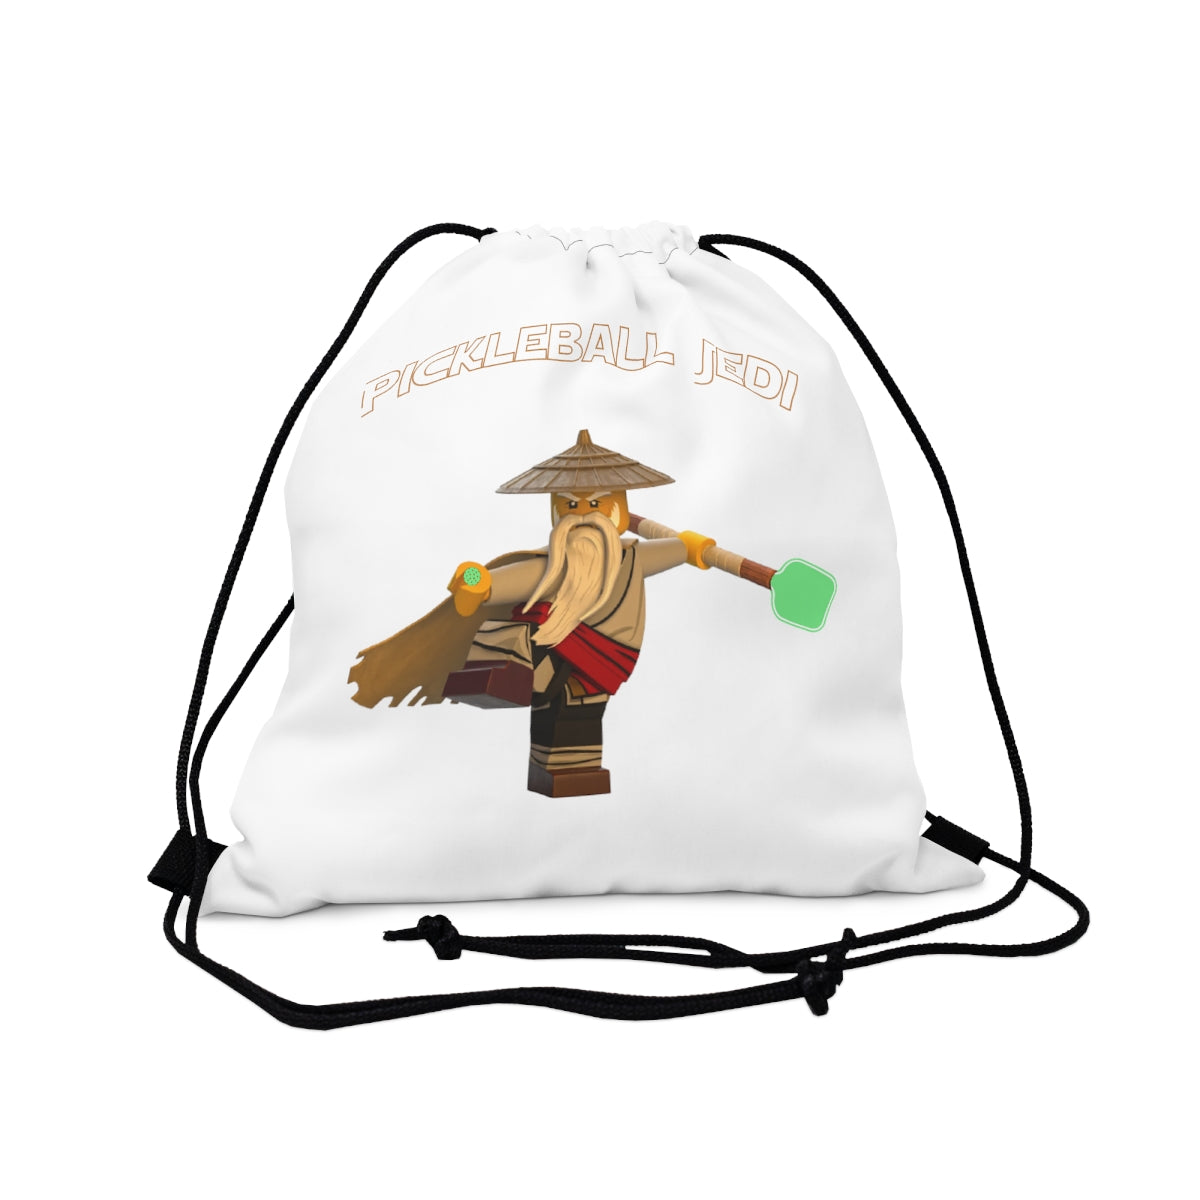 'Pickleball Jedi' Drawstring Bag